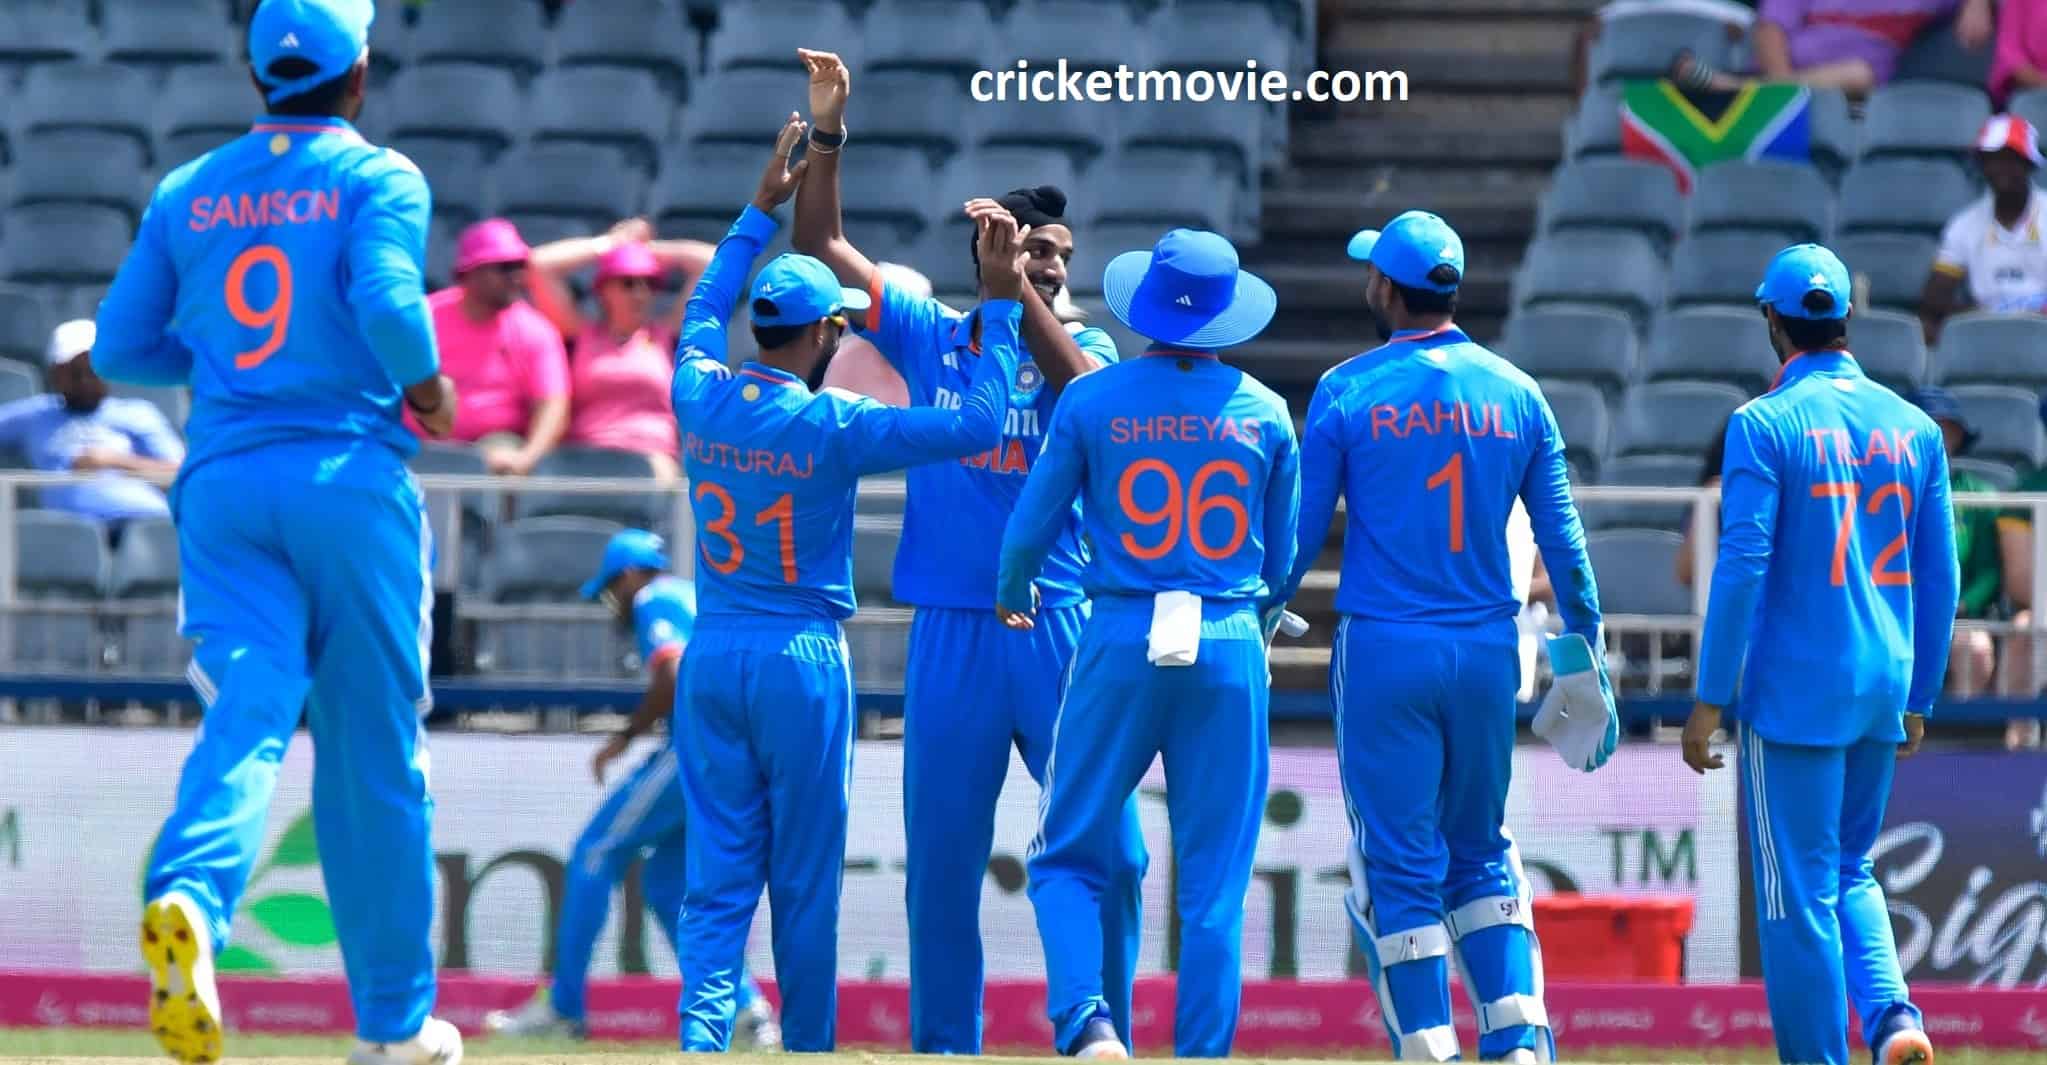 South Africa won 2nd ODI against Team India-cricketmovie.com